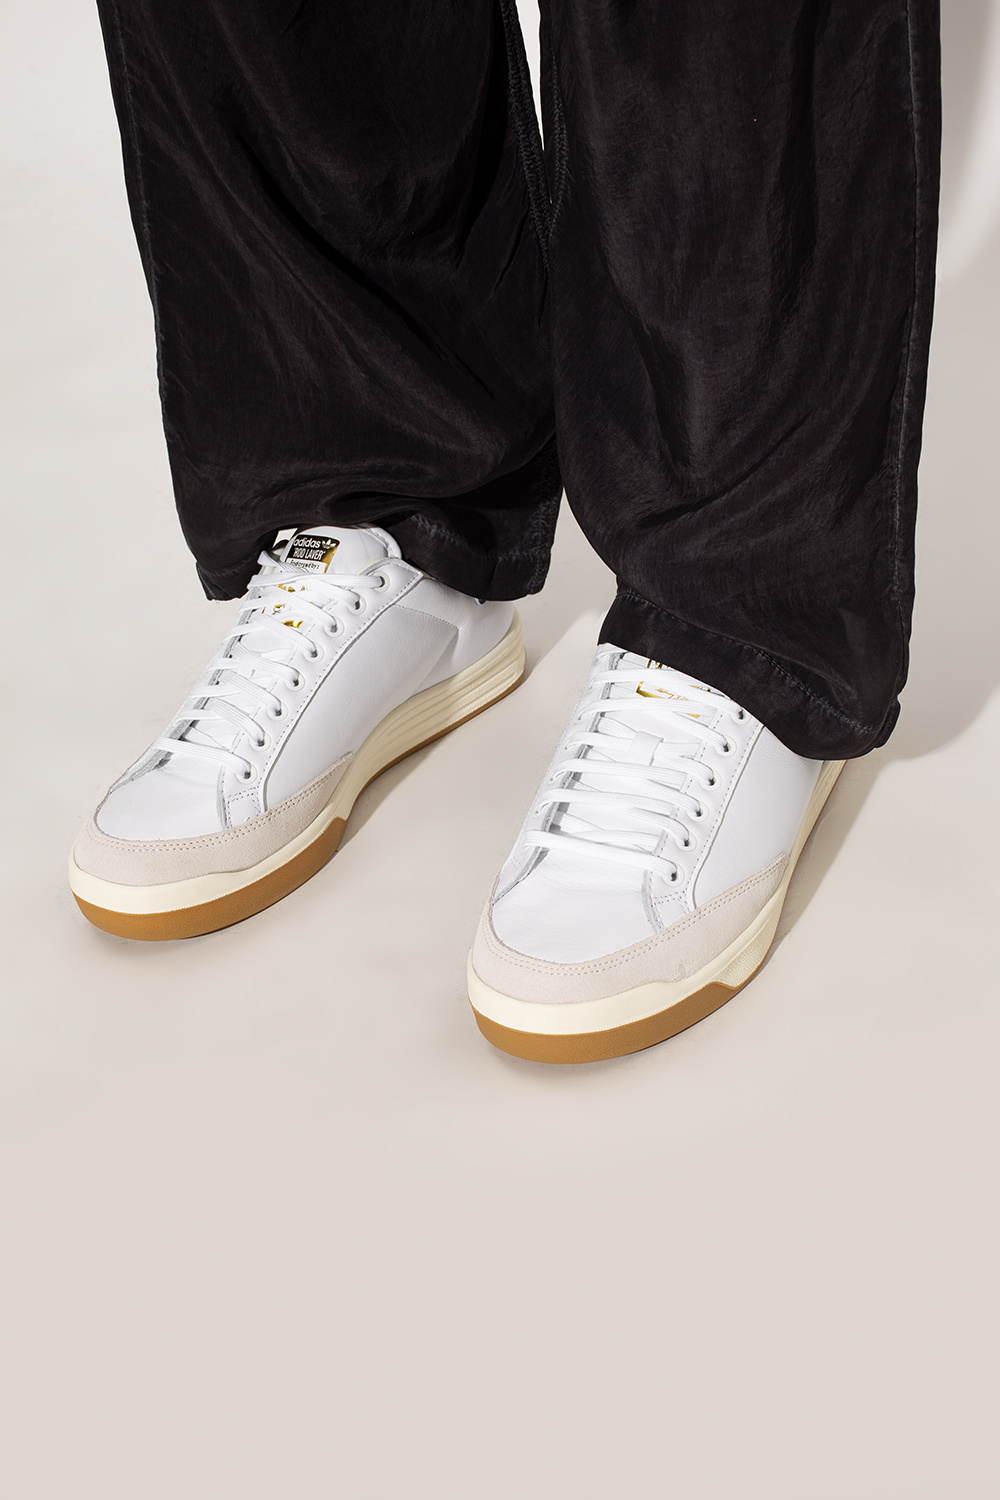 ADIDAS Originals 'Rod sneakers | | Men's Shoes | Adidas NMD_XR1 triple